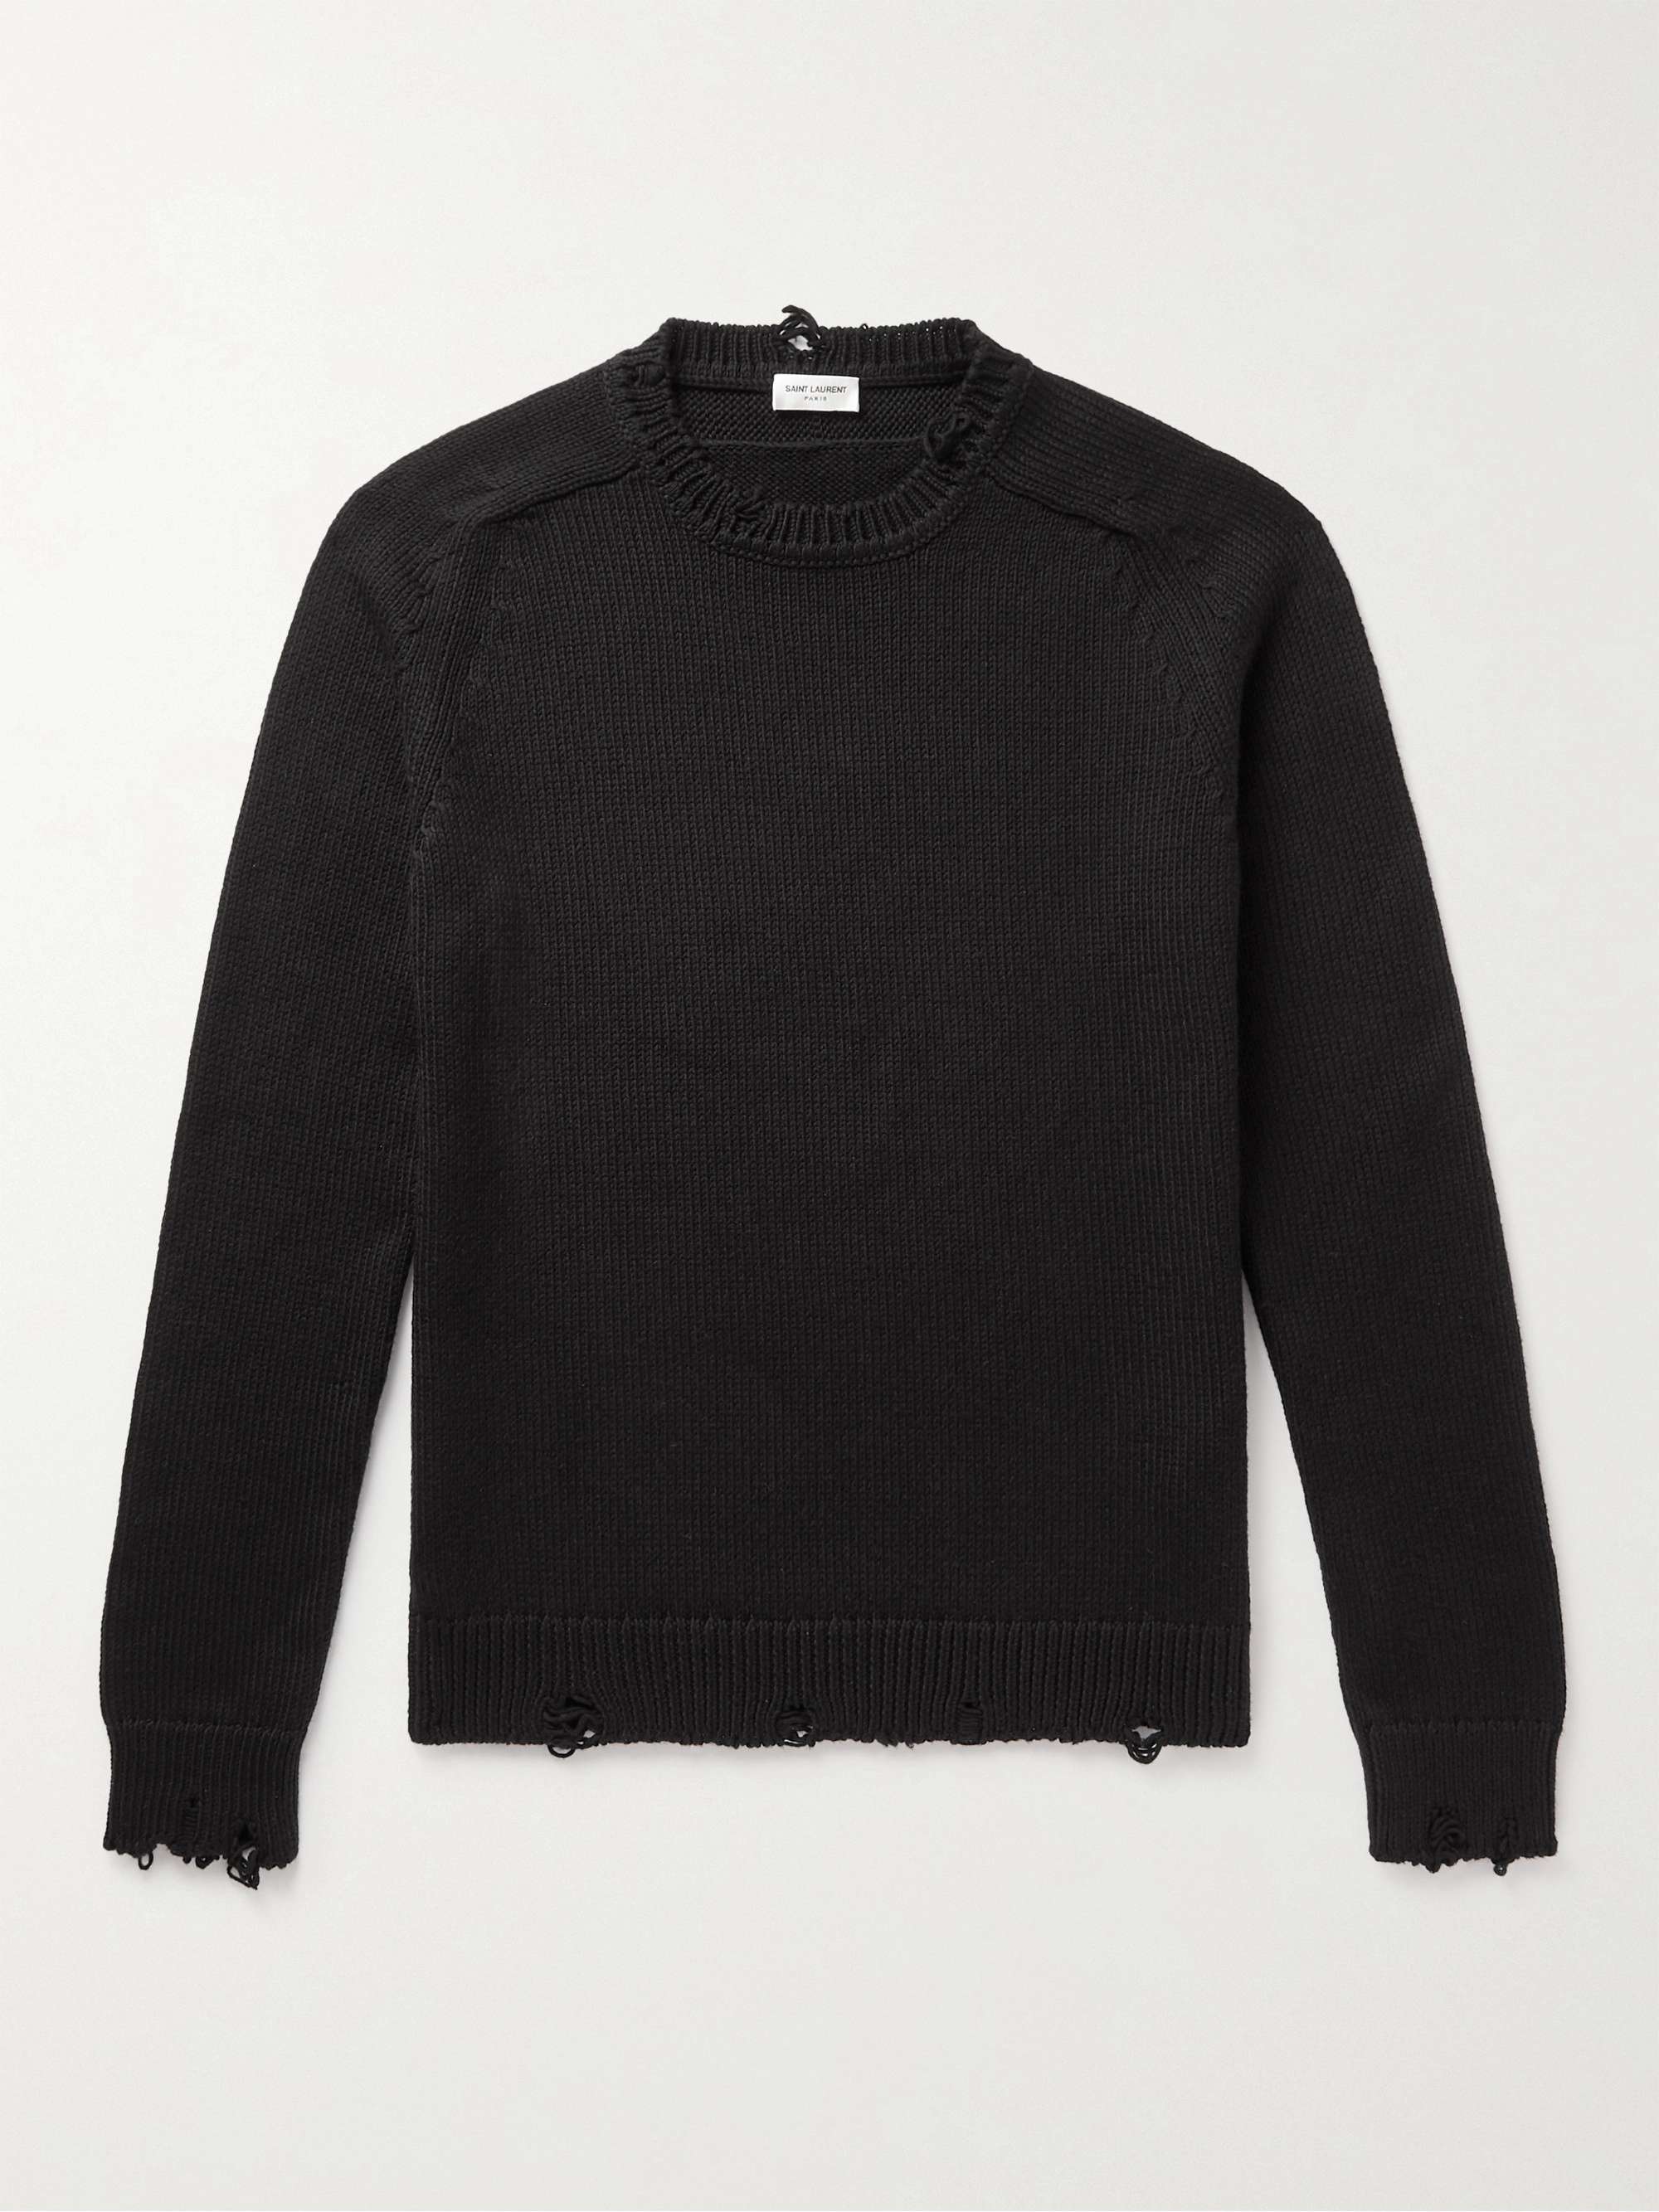 SAINT LAURENT Distressed Cotton Sweater for Men | MR PORTER